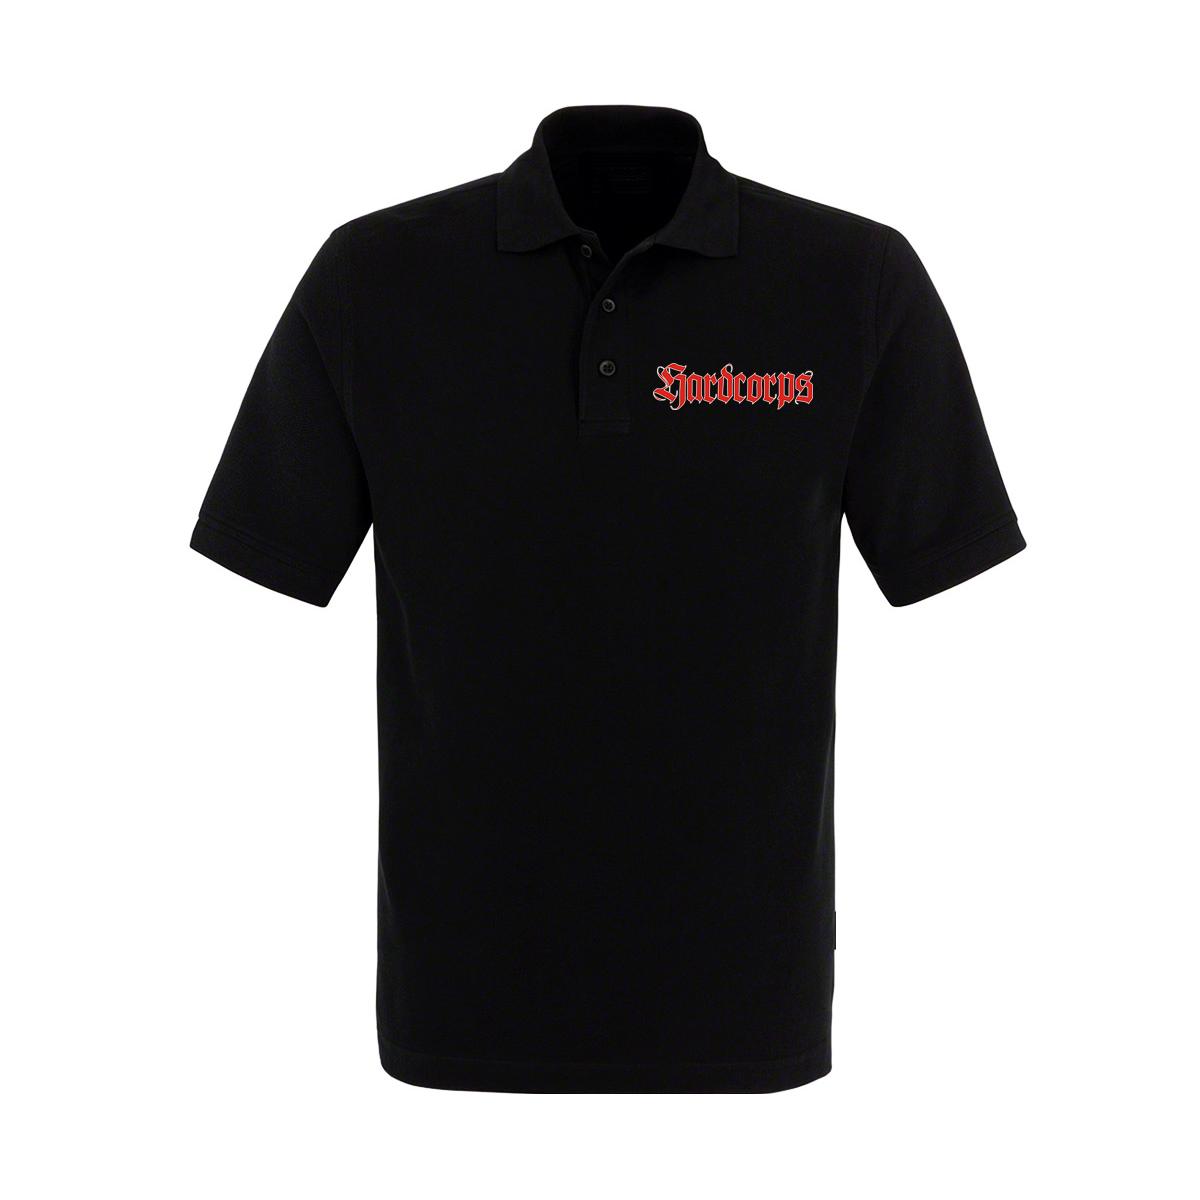 Hardcorps - Männer Polo Shirt - Clockwork - schwarz